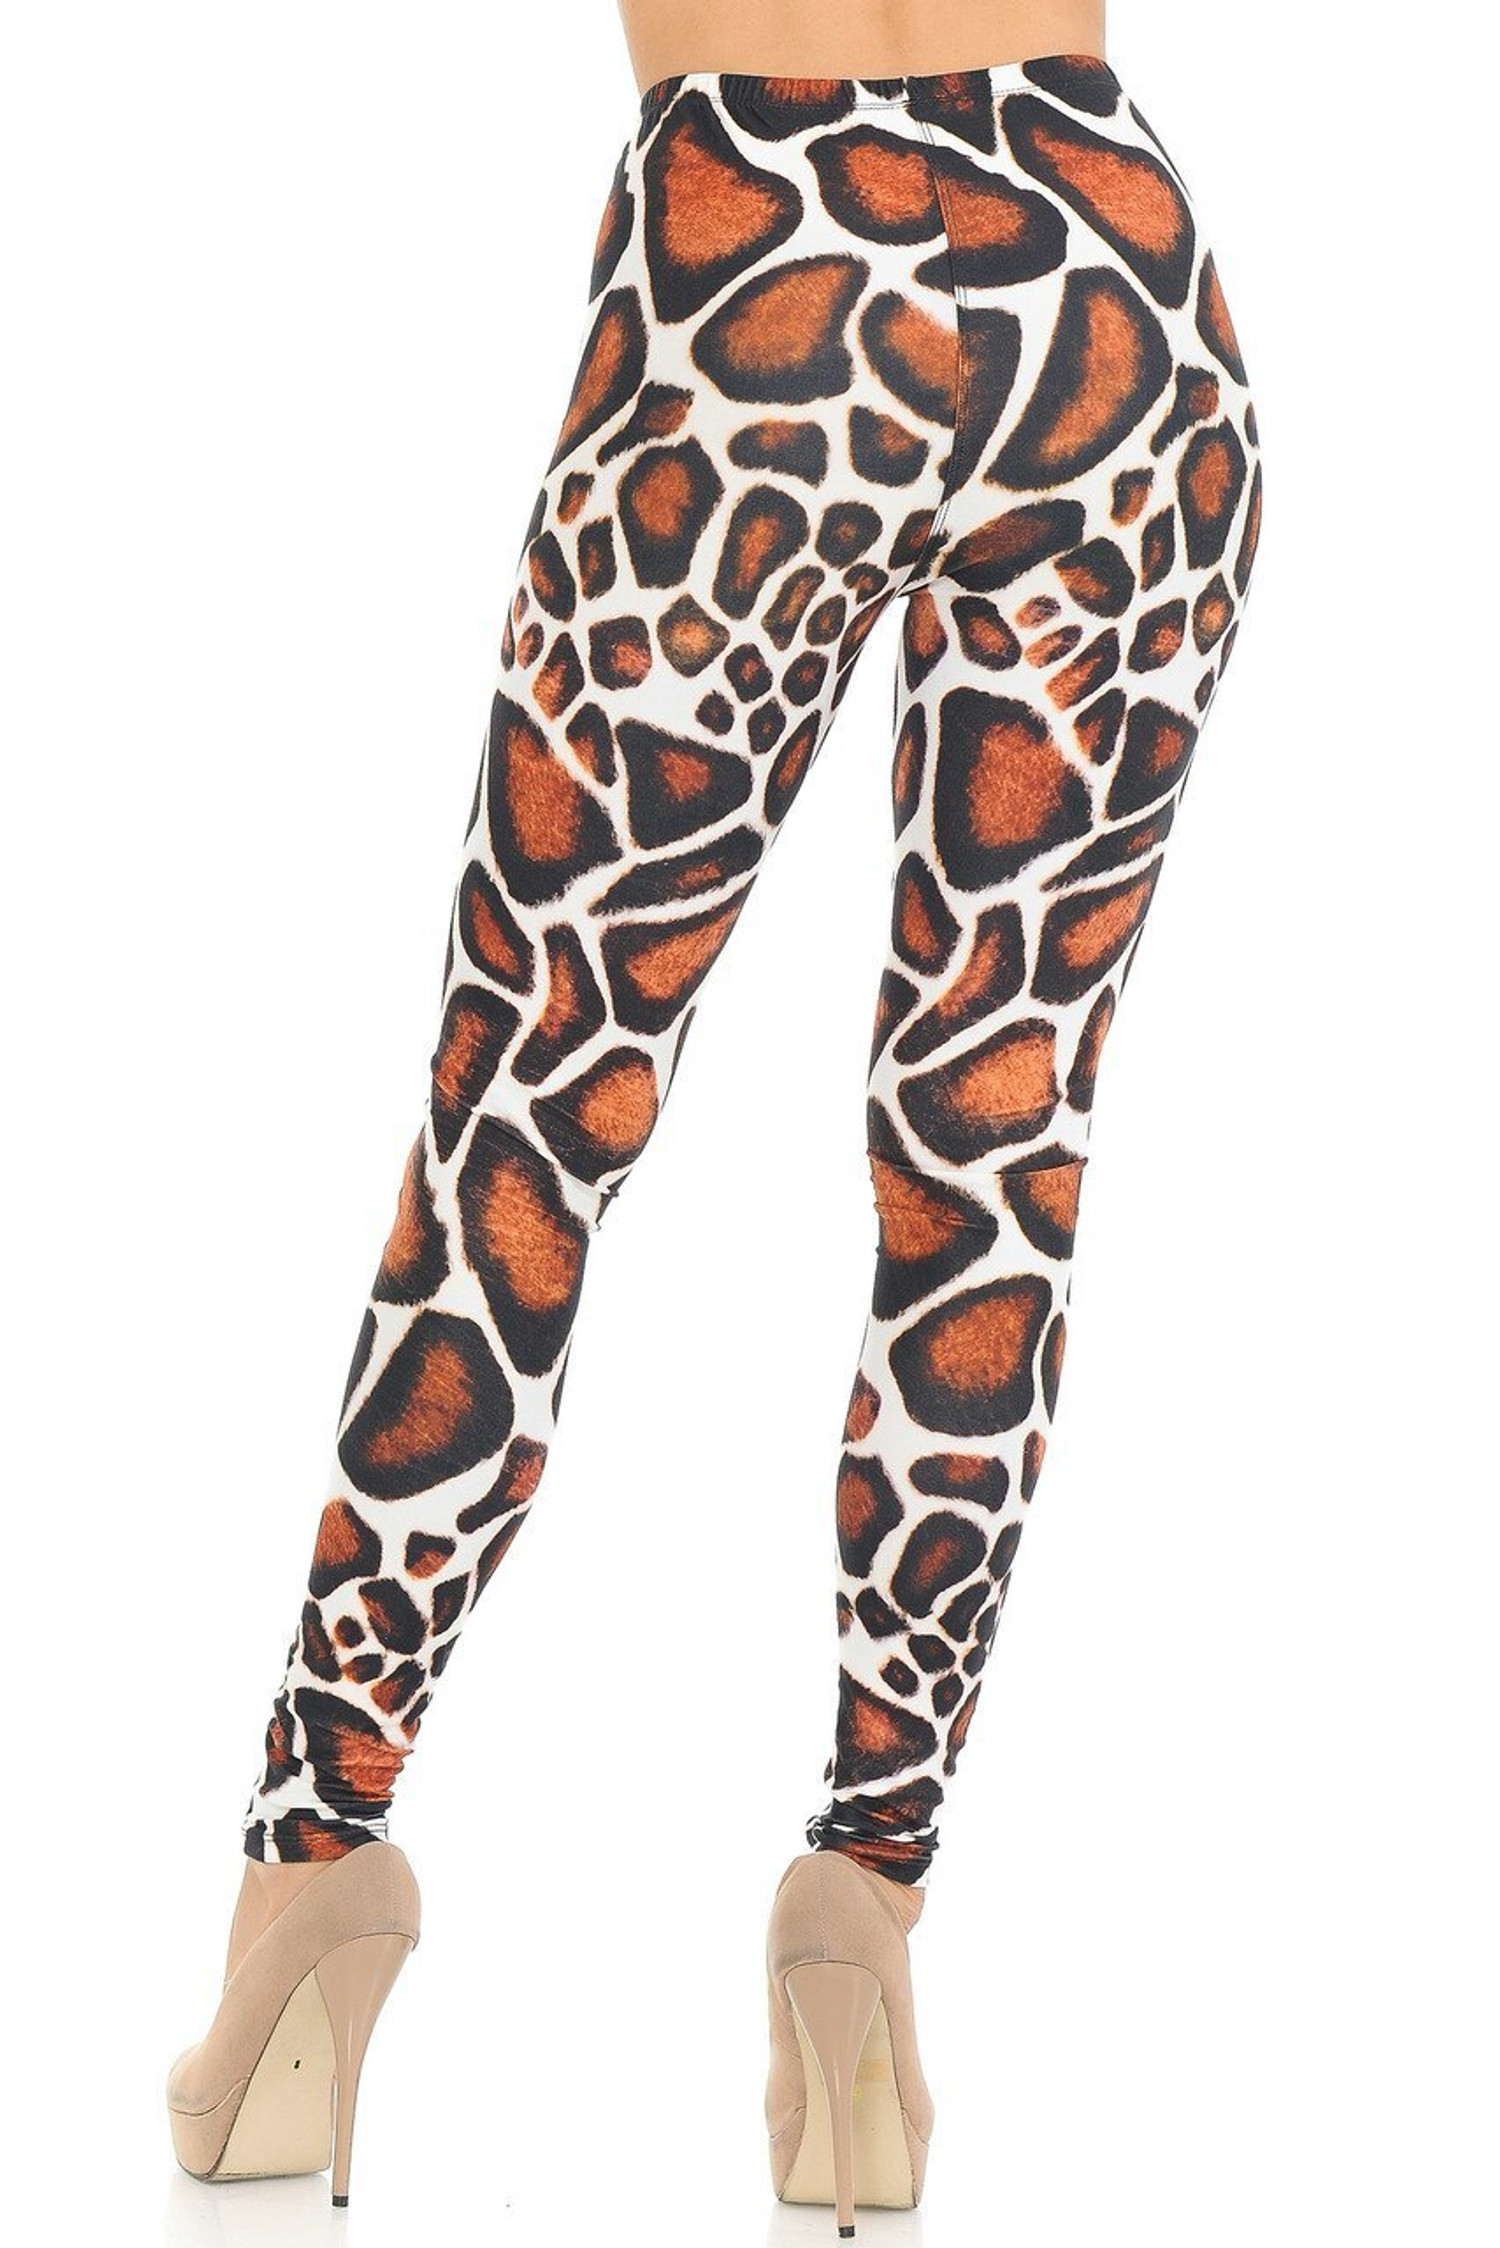 Creamy Soft Giraffe Print Leggings - USA Fashion™